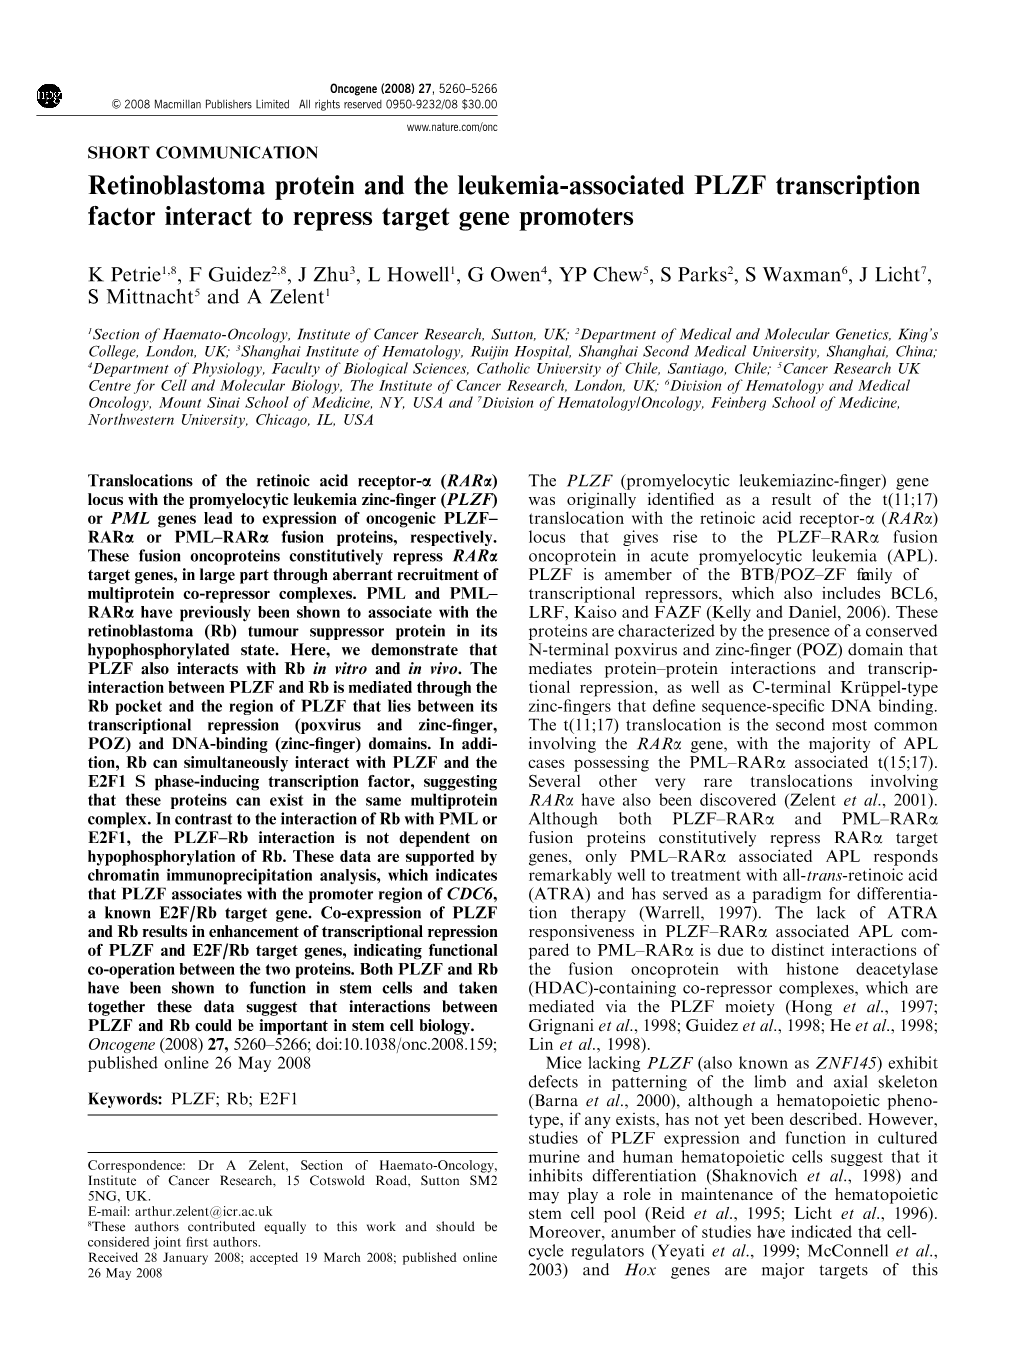 Retinoblastoma Protein and the Leukemia-Associated PLZF Transcription Factor Interact to Repress Target Gene Promoters